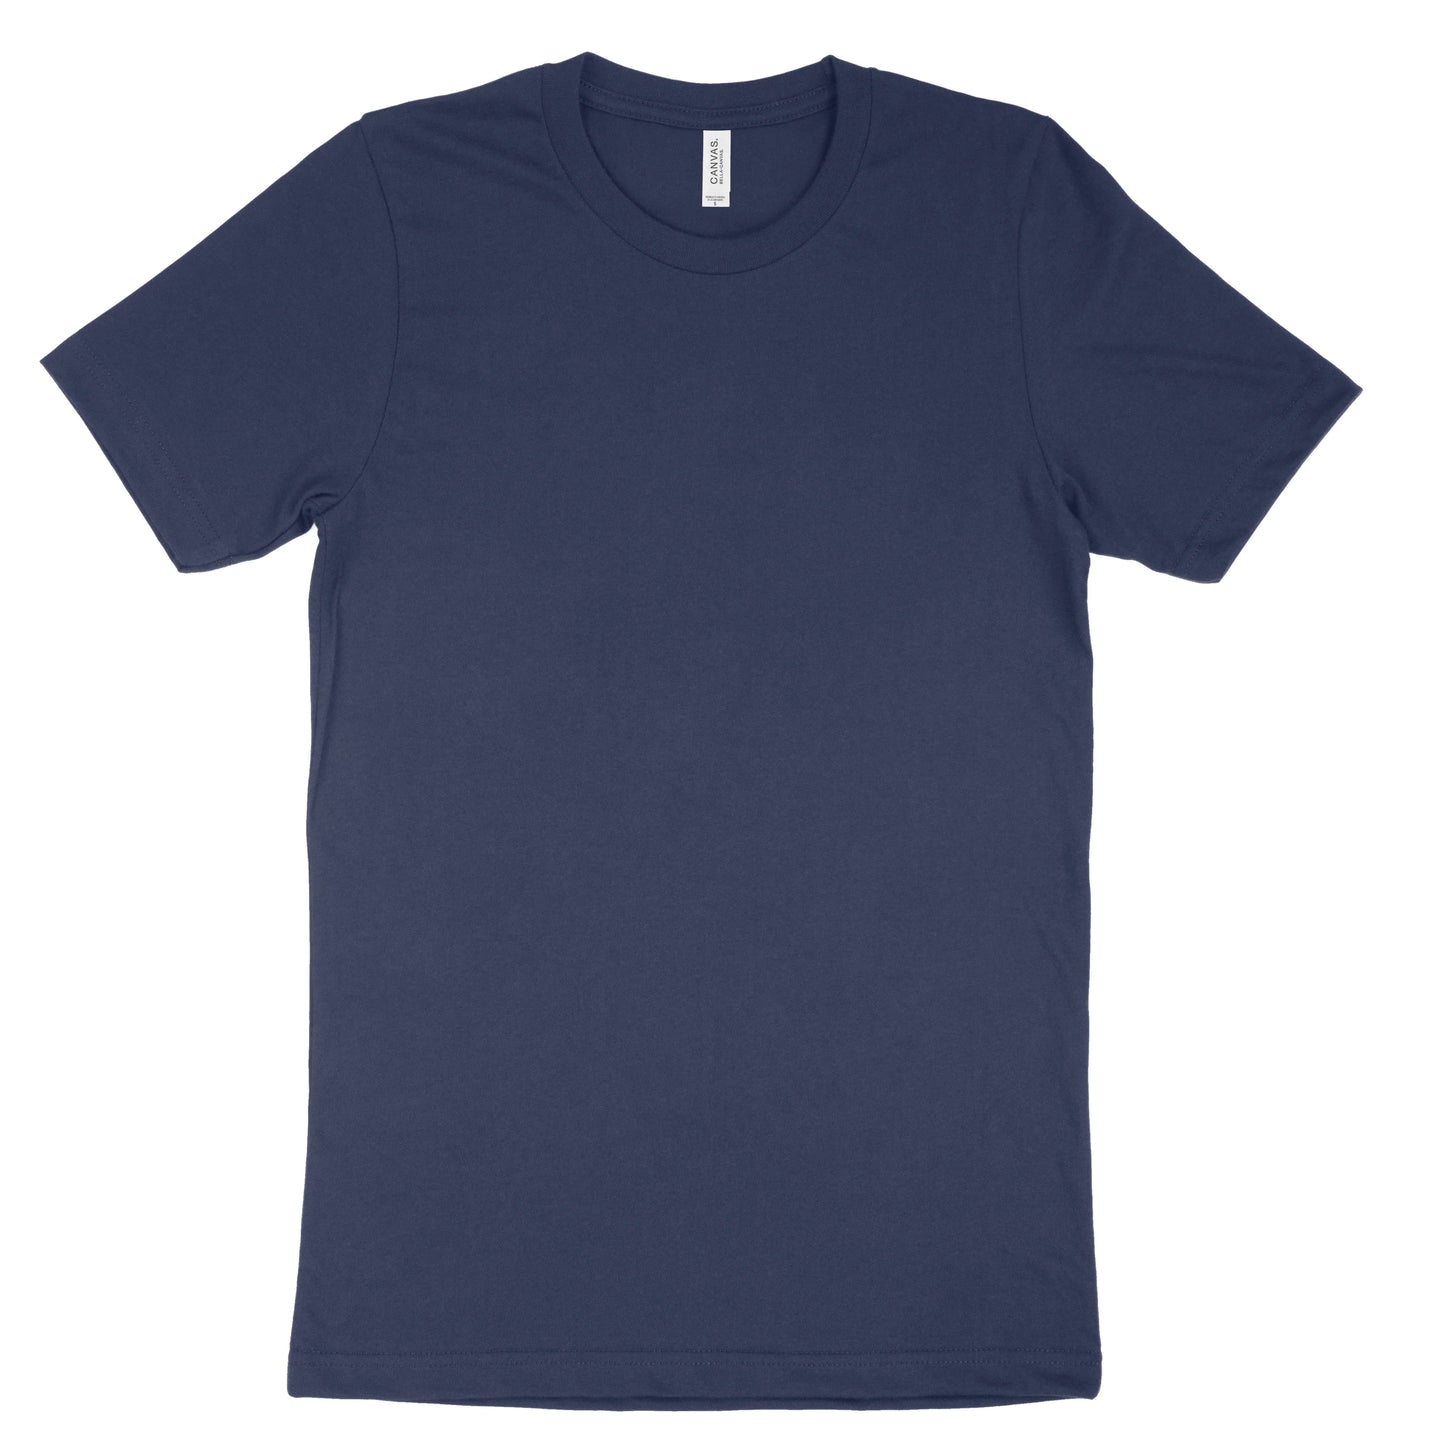 Configure my custom t-shirt for ActBlue - Three Stars